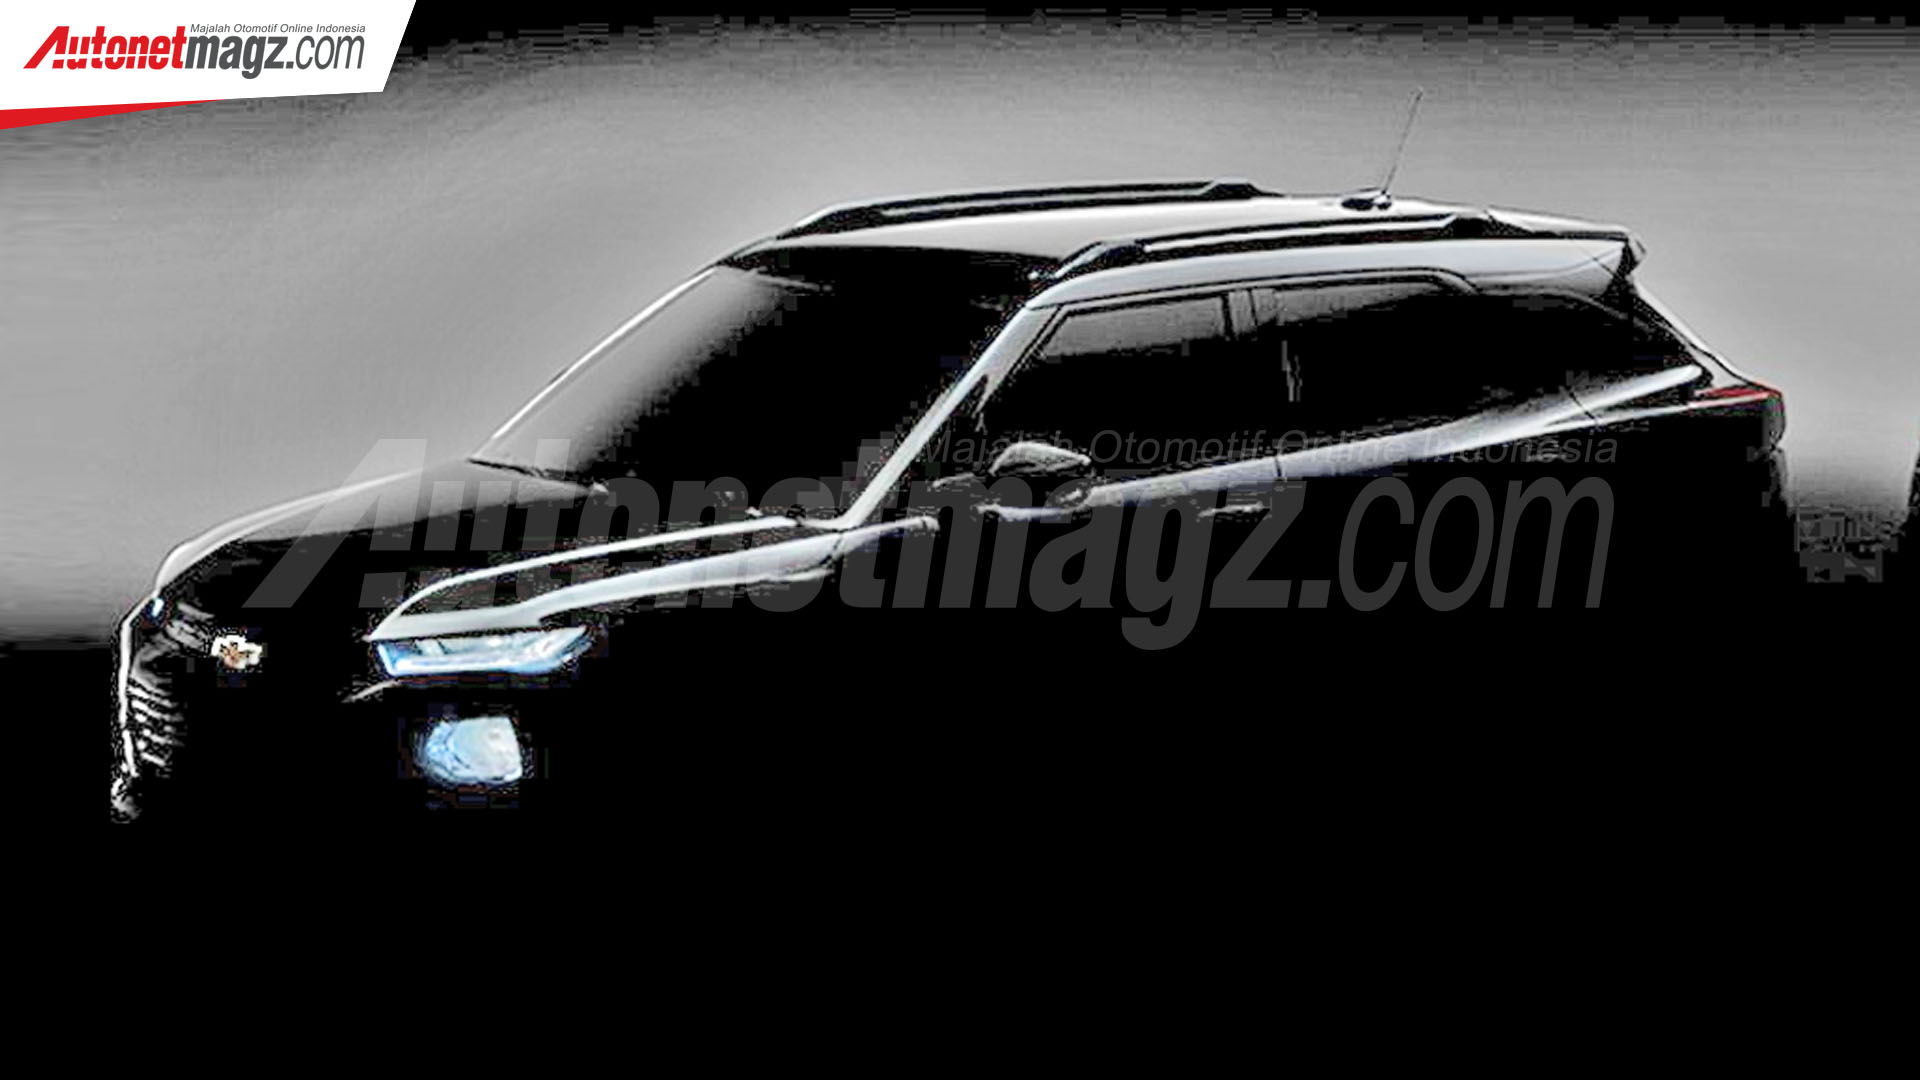 Berita, Teaser All New Chevrolet Trailblazer: Teaser All New Tracker & Trailblazer Diumbar, Rilis 16 April di China